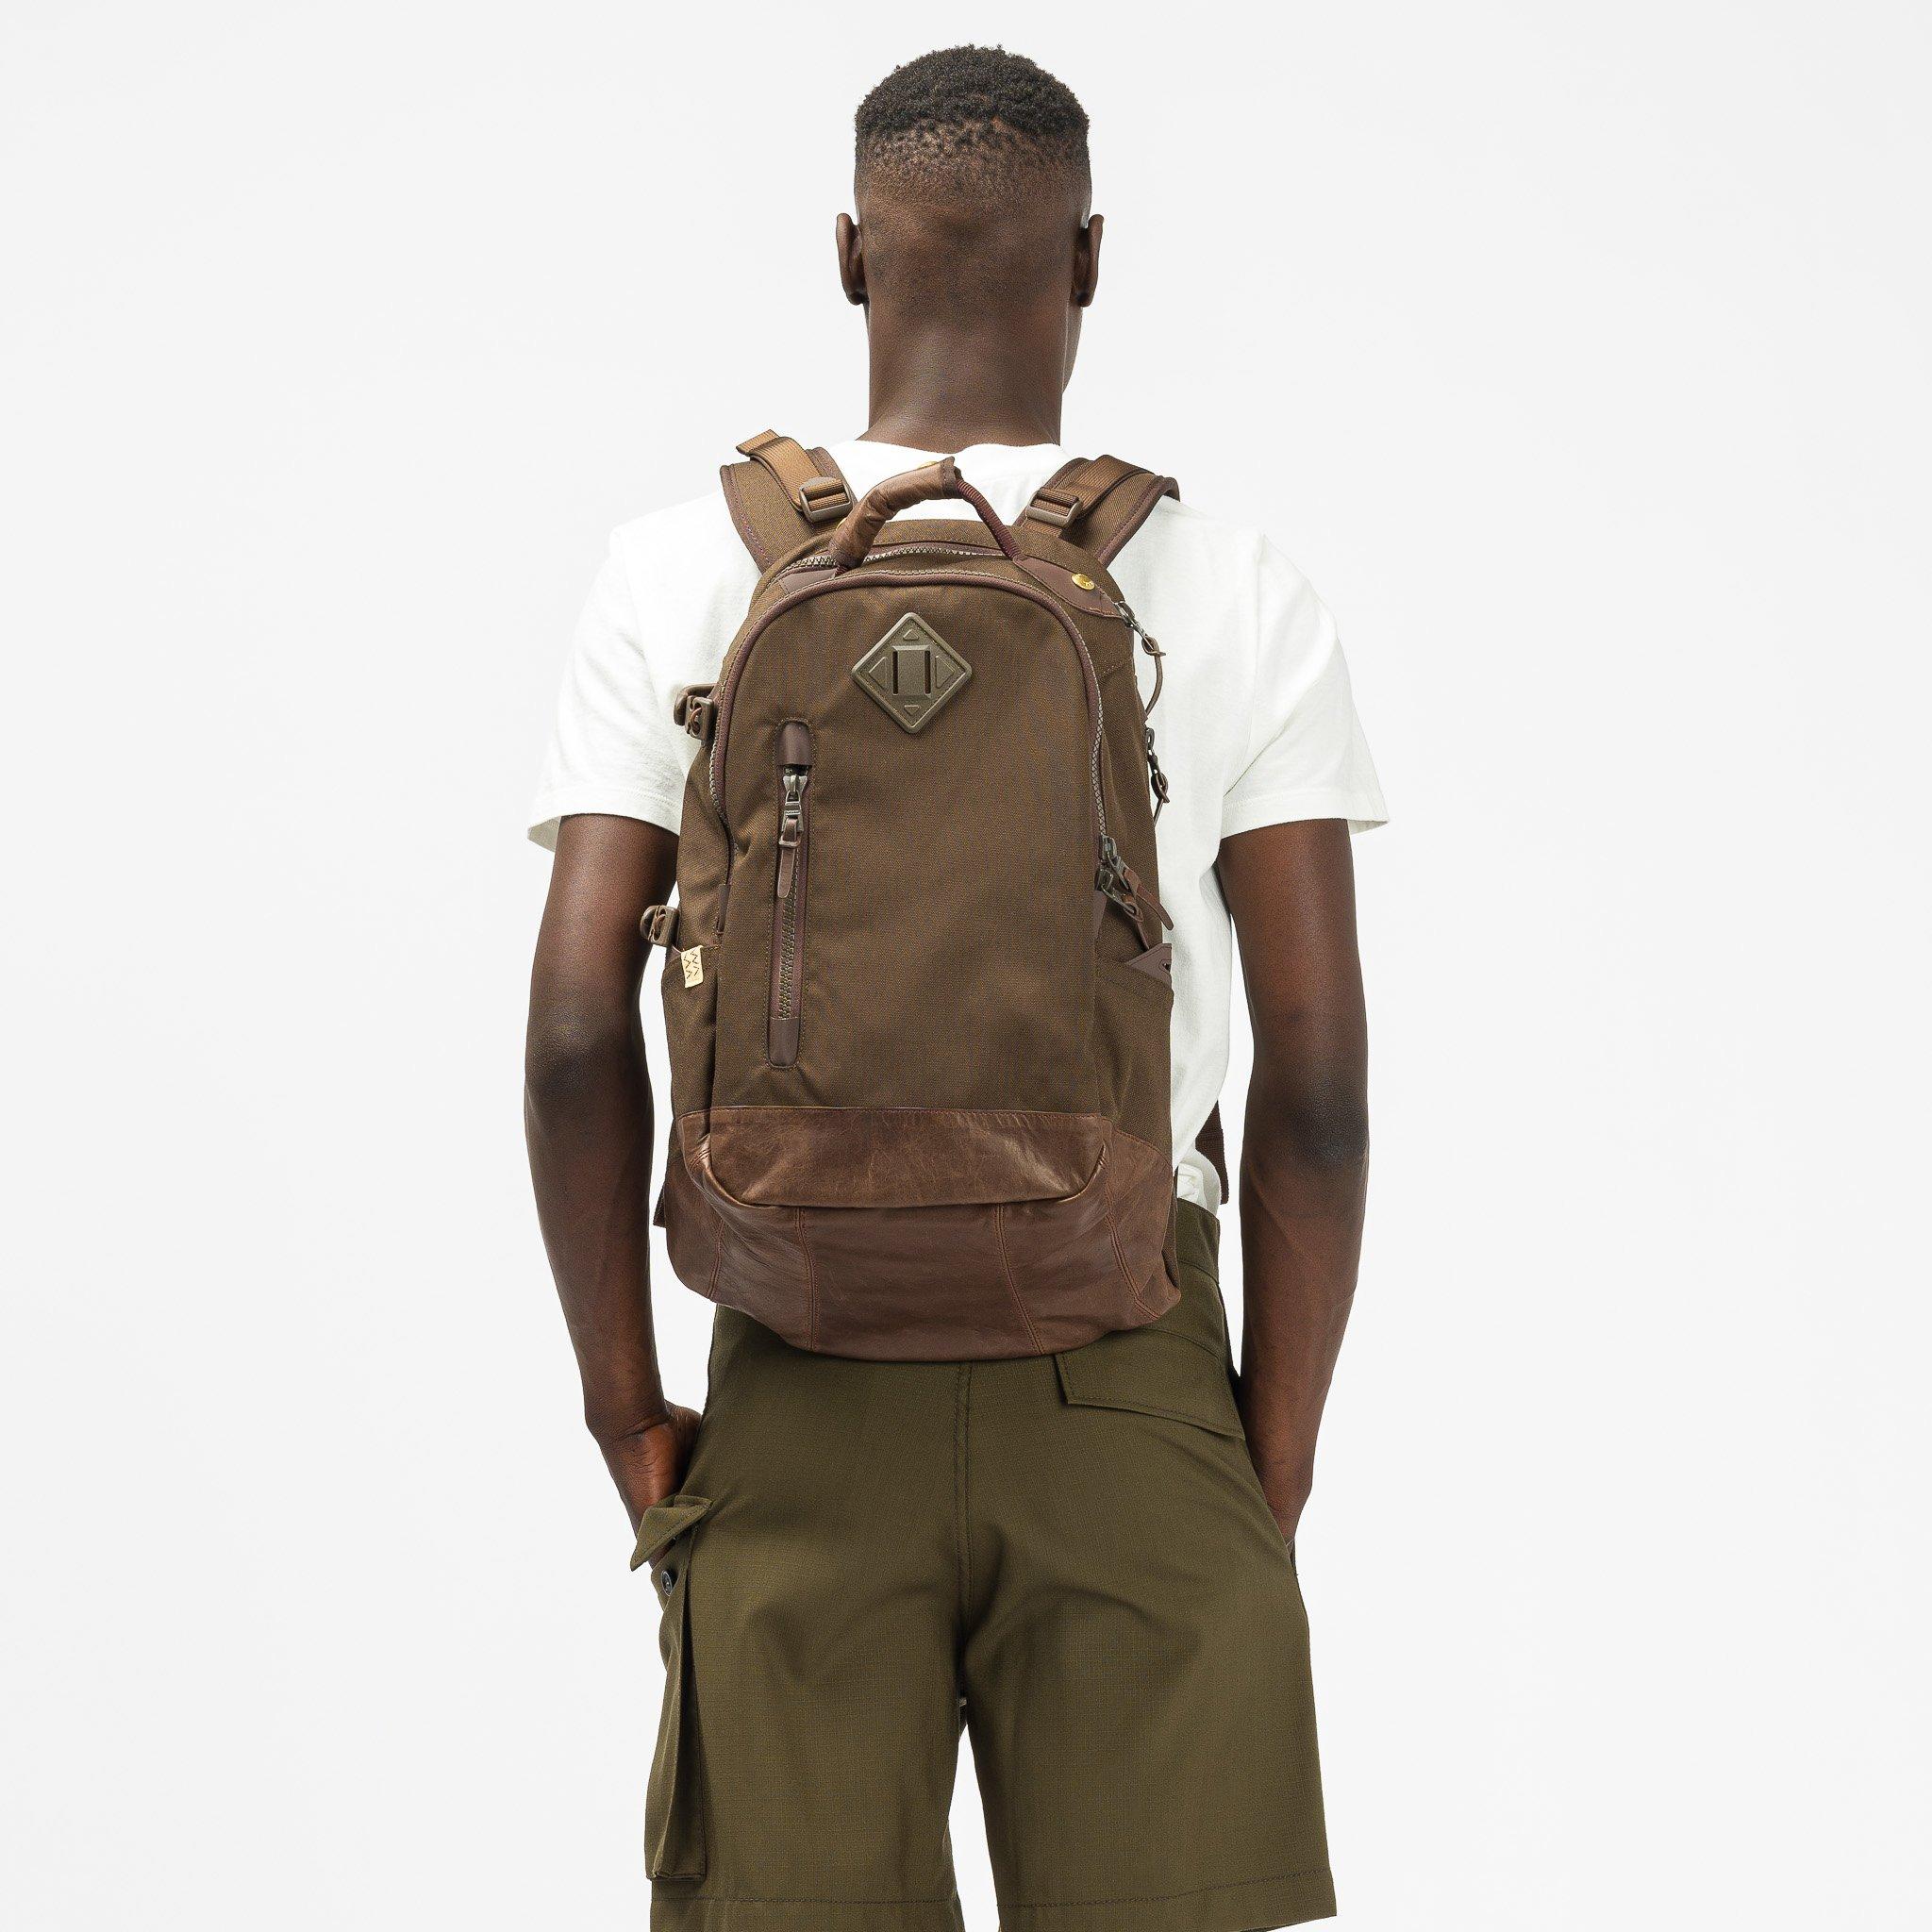 Visvim Synthetic Ballistic Backpack 20l in Dark Brown (Brown) for 